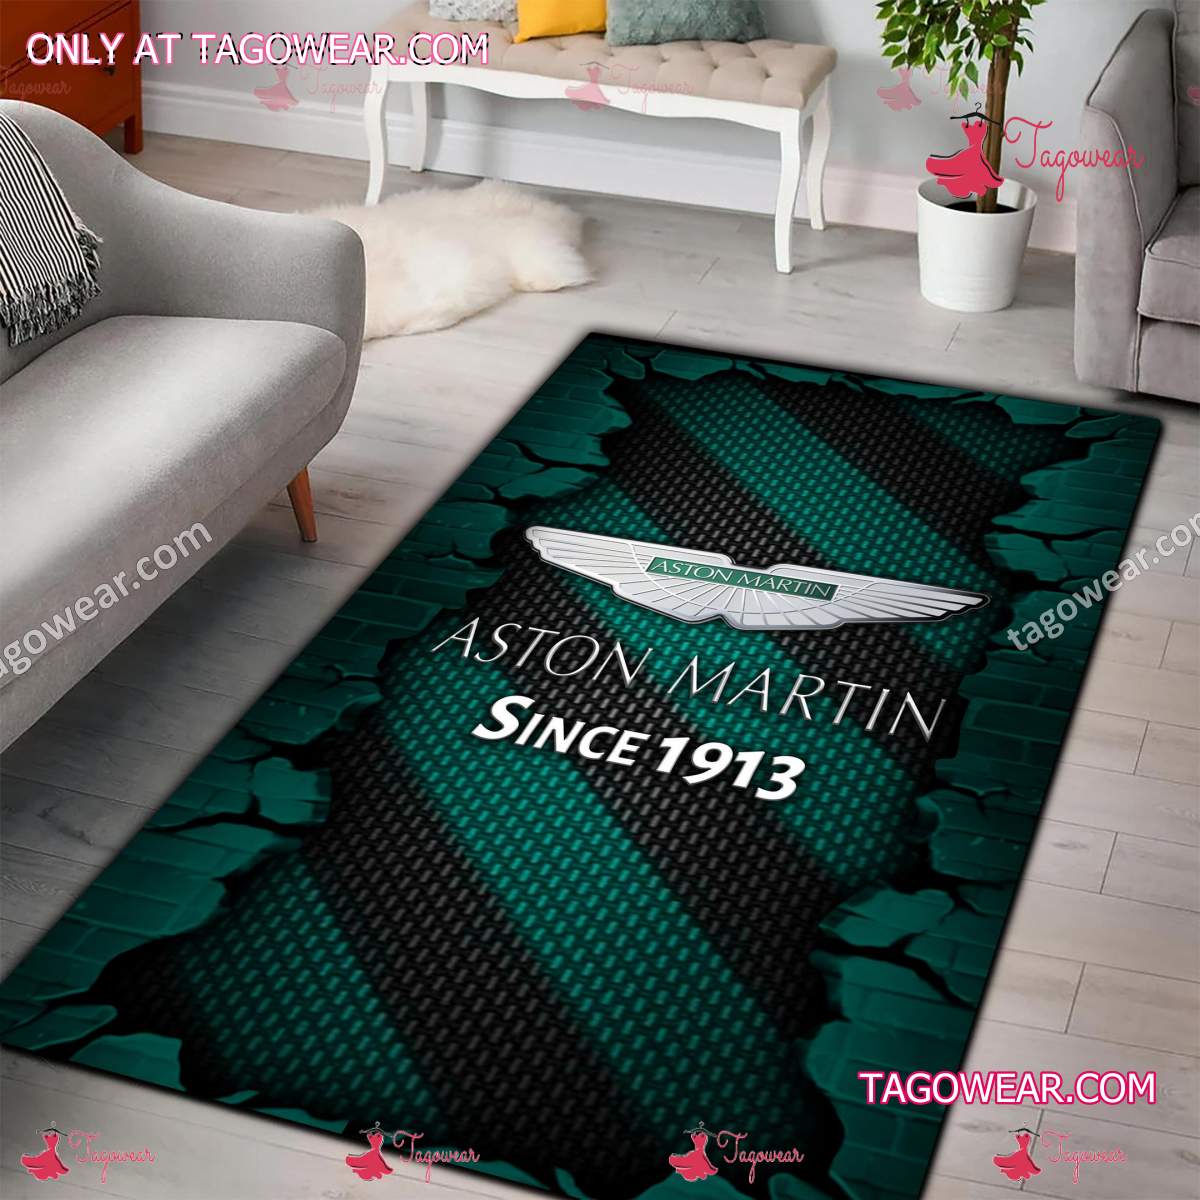 Aston Martin Since 1913 Rug Carpet